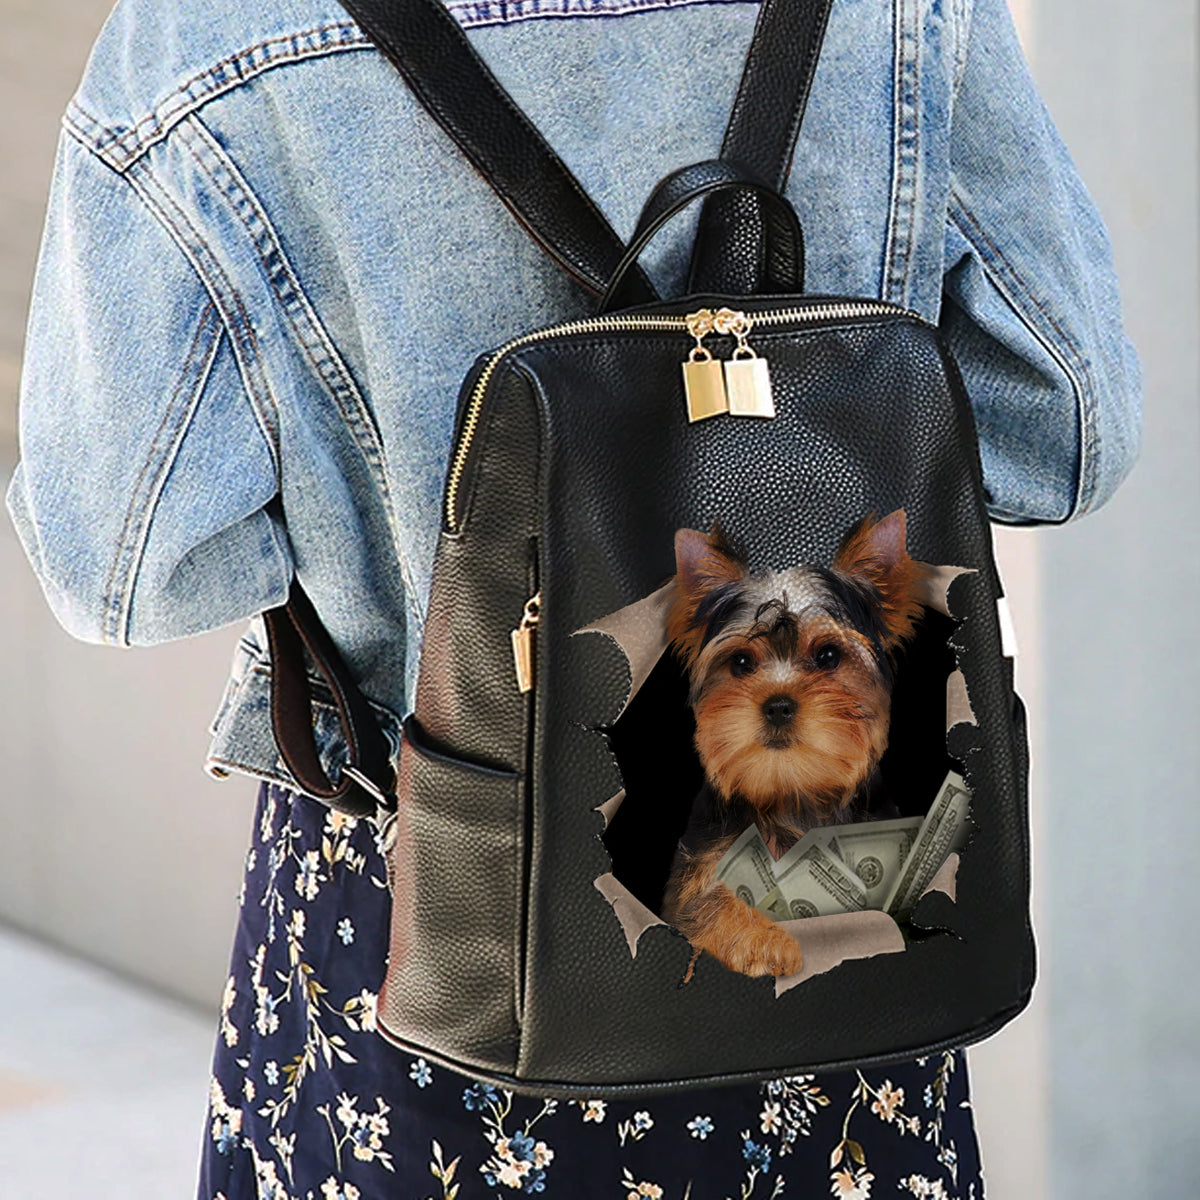 It's All Mine - Yorkshire Terrier Backpack V1